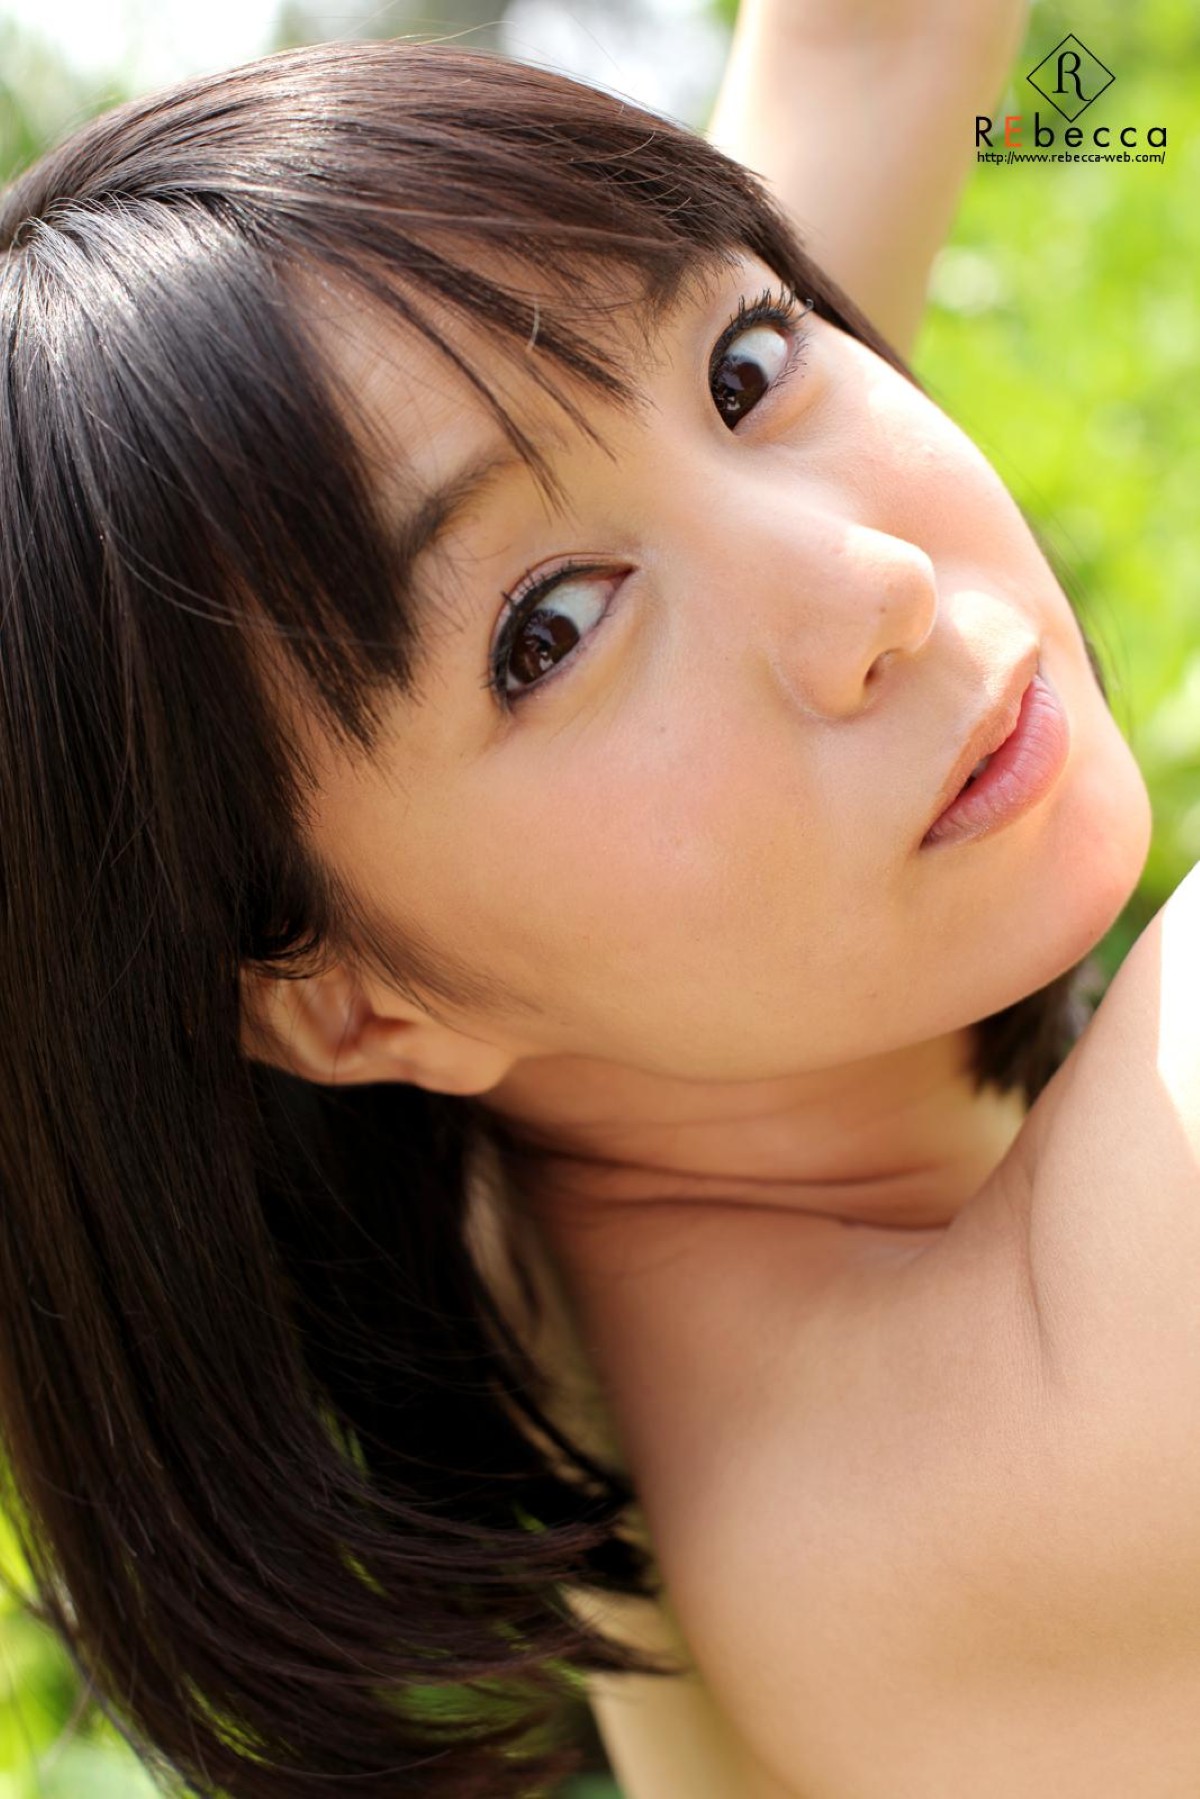 REbecca Nana Nanaumi 七海なな Dokidoki Secret Nudity Vol 1 0028 1658992489.jpg